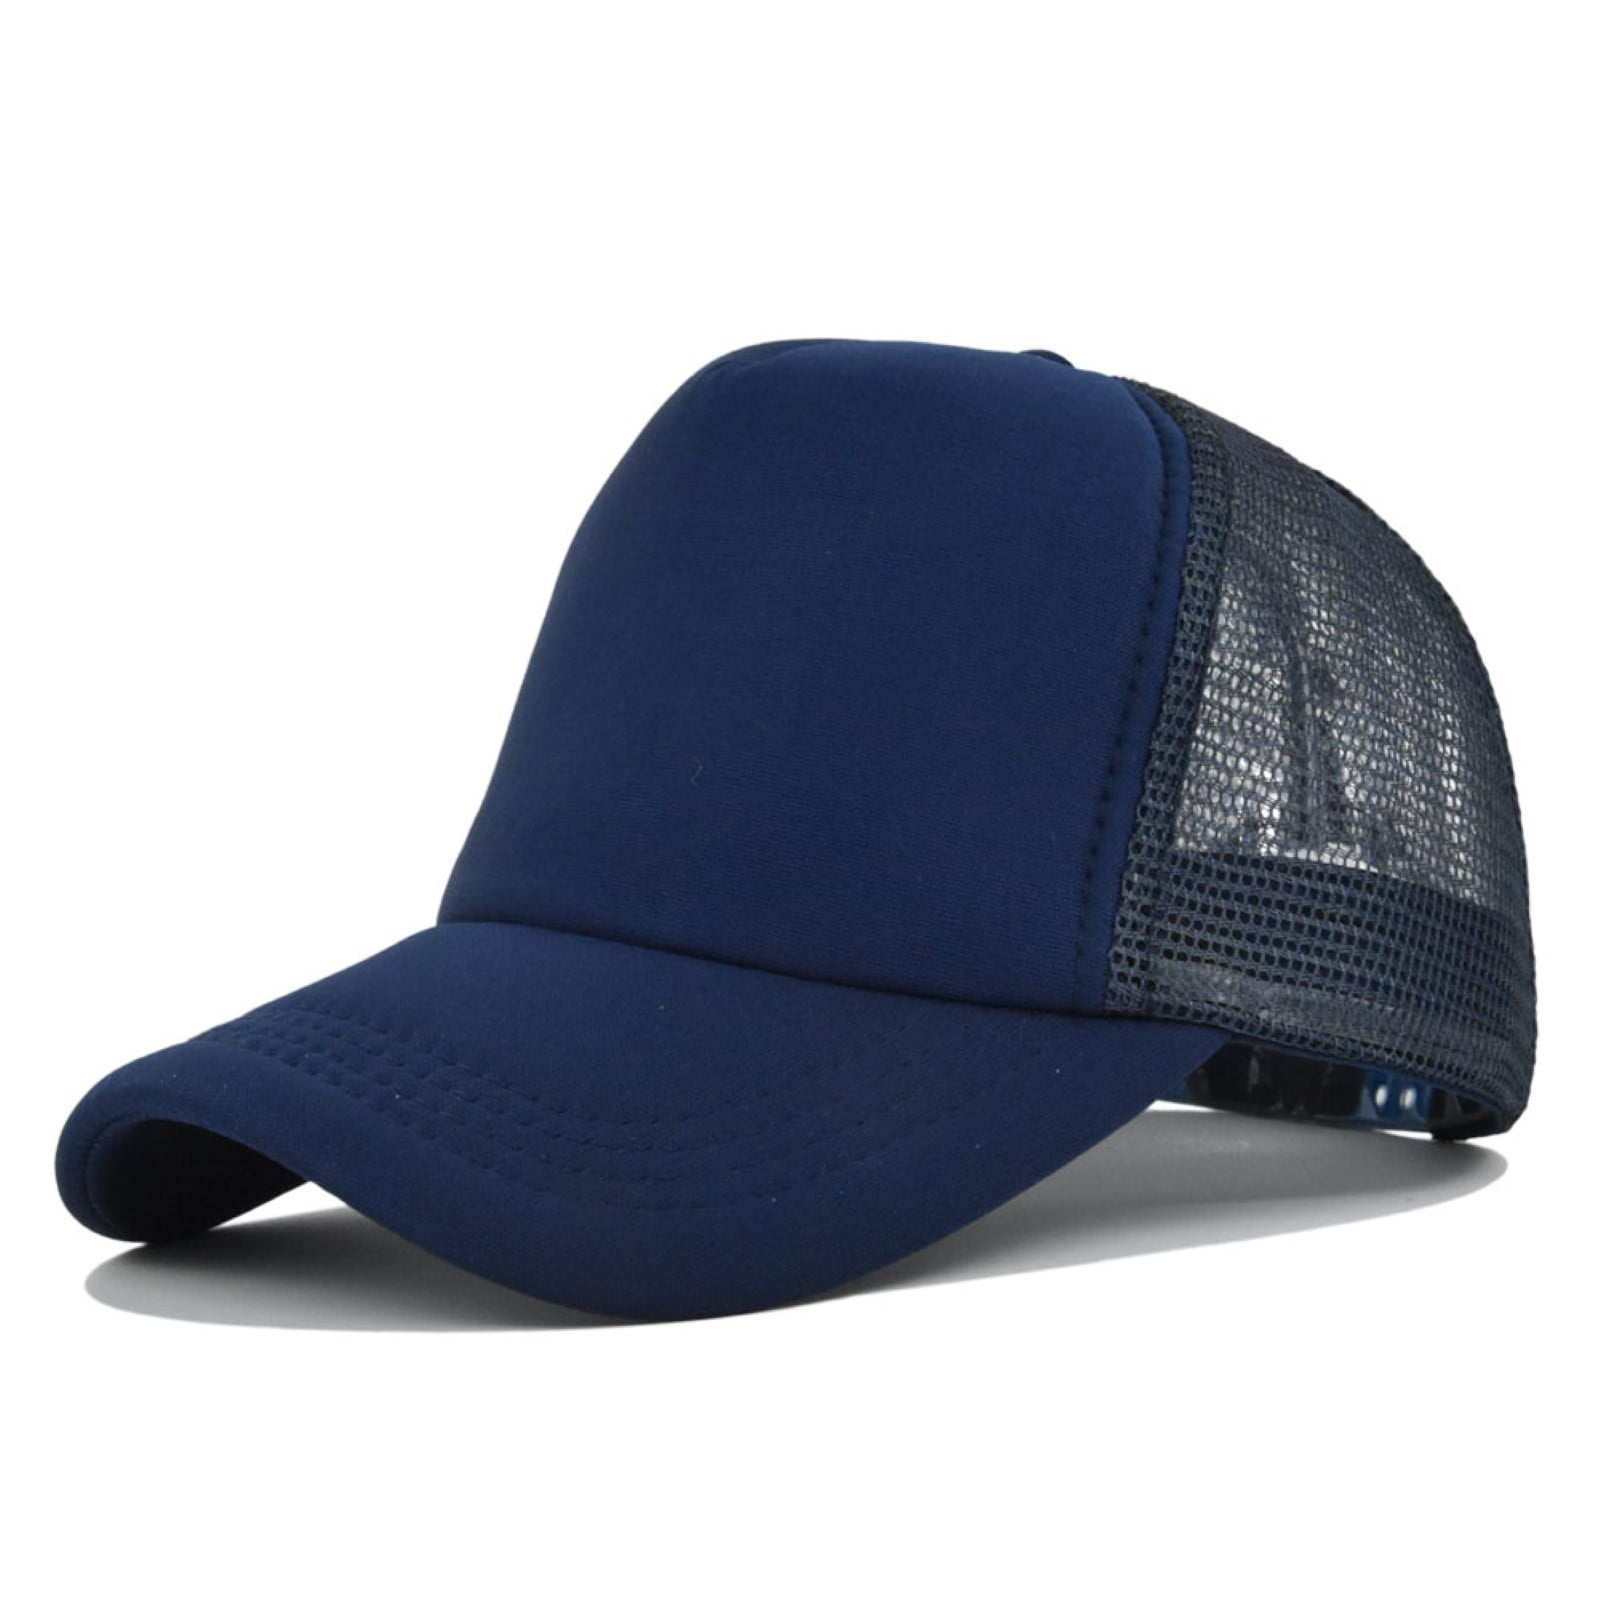 NIUREDLTD Men's And Women's Adjustable Baseball Cap Solid Color Mesh-Back  Trucker Cap Curved Wide Brim Outdoor Sun Hat Dark Blue One Size 